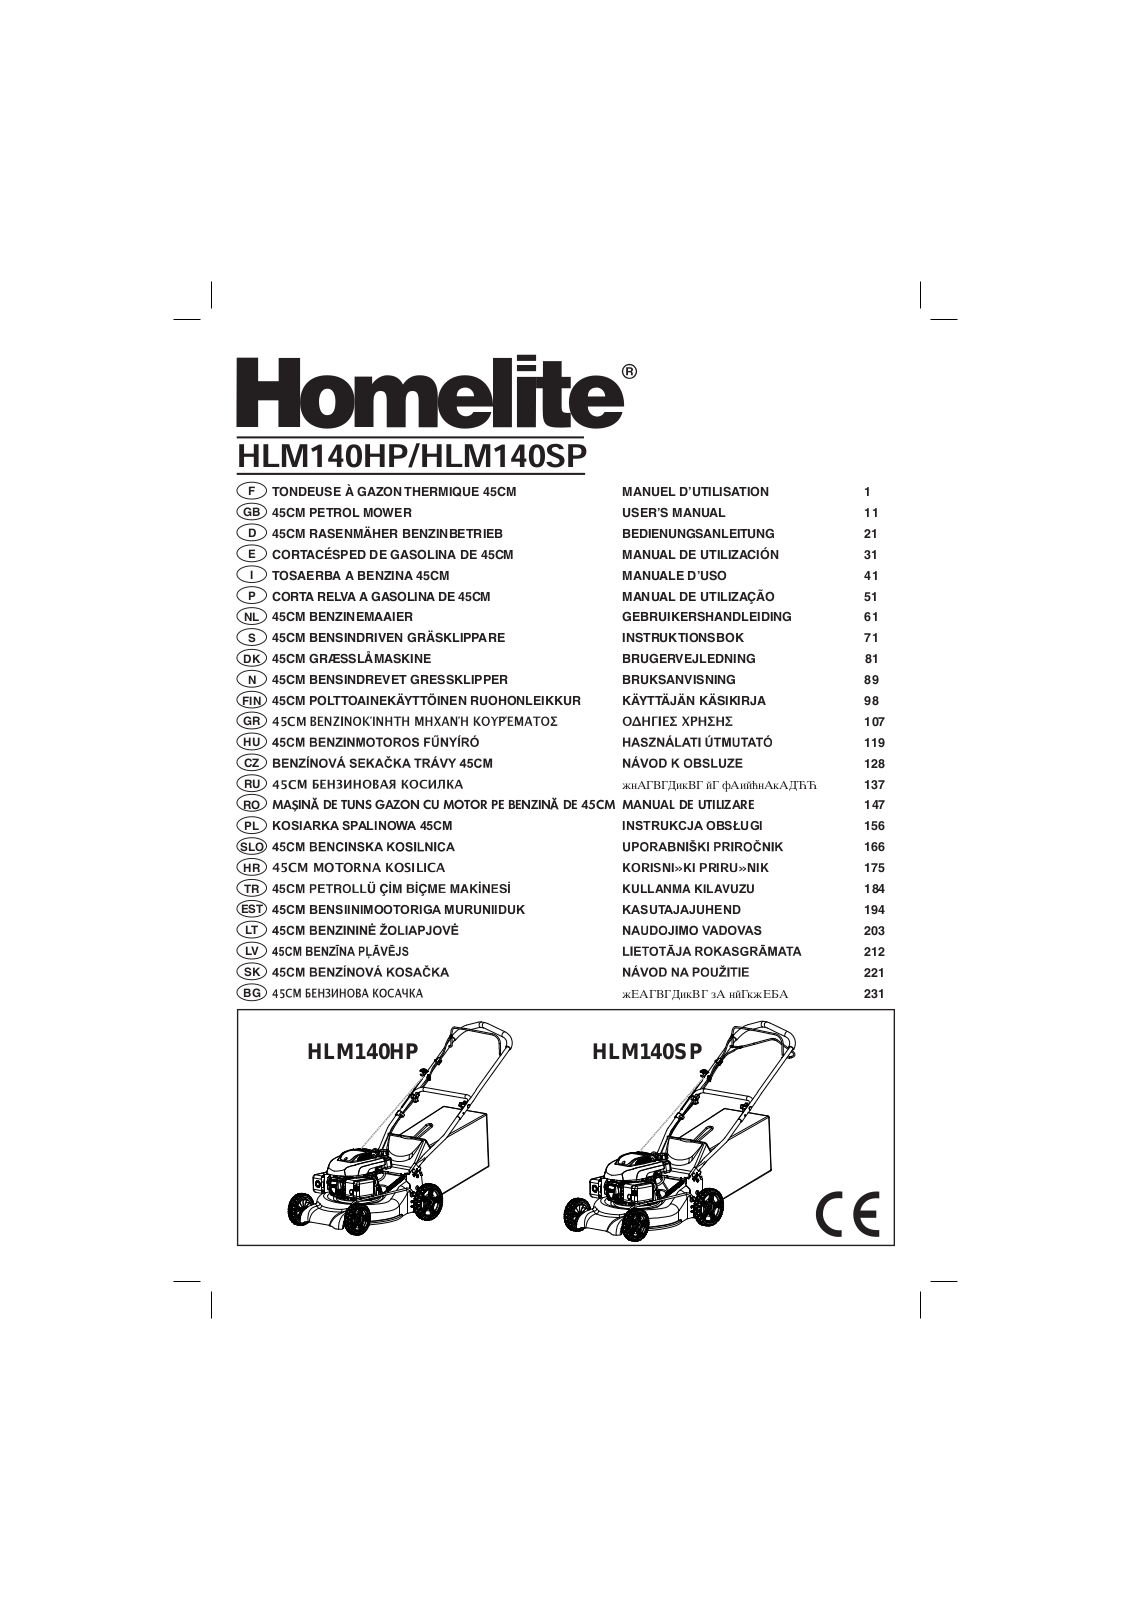 Homelite HLM 140 SP User Manual